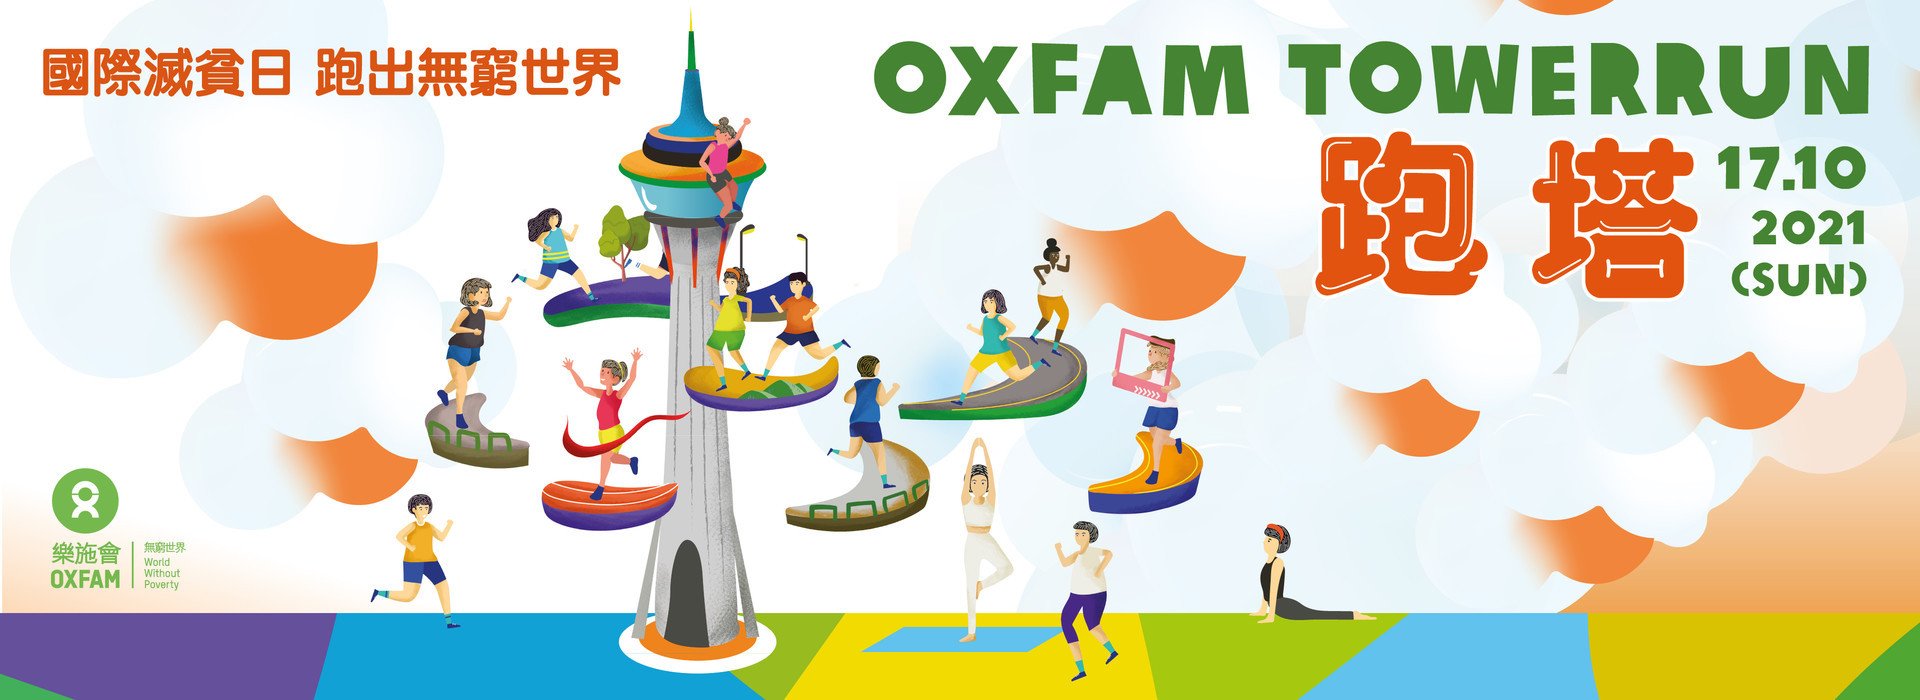 Oxfam Towerrun